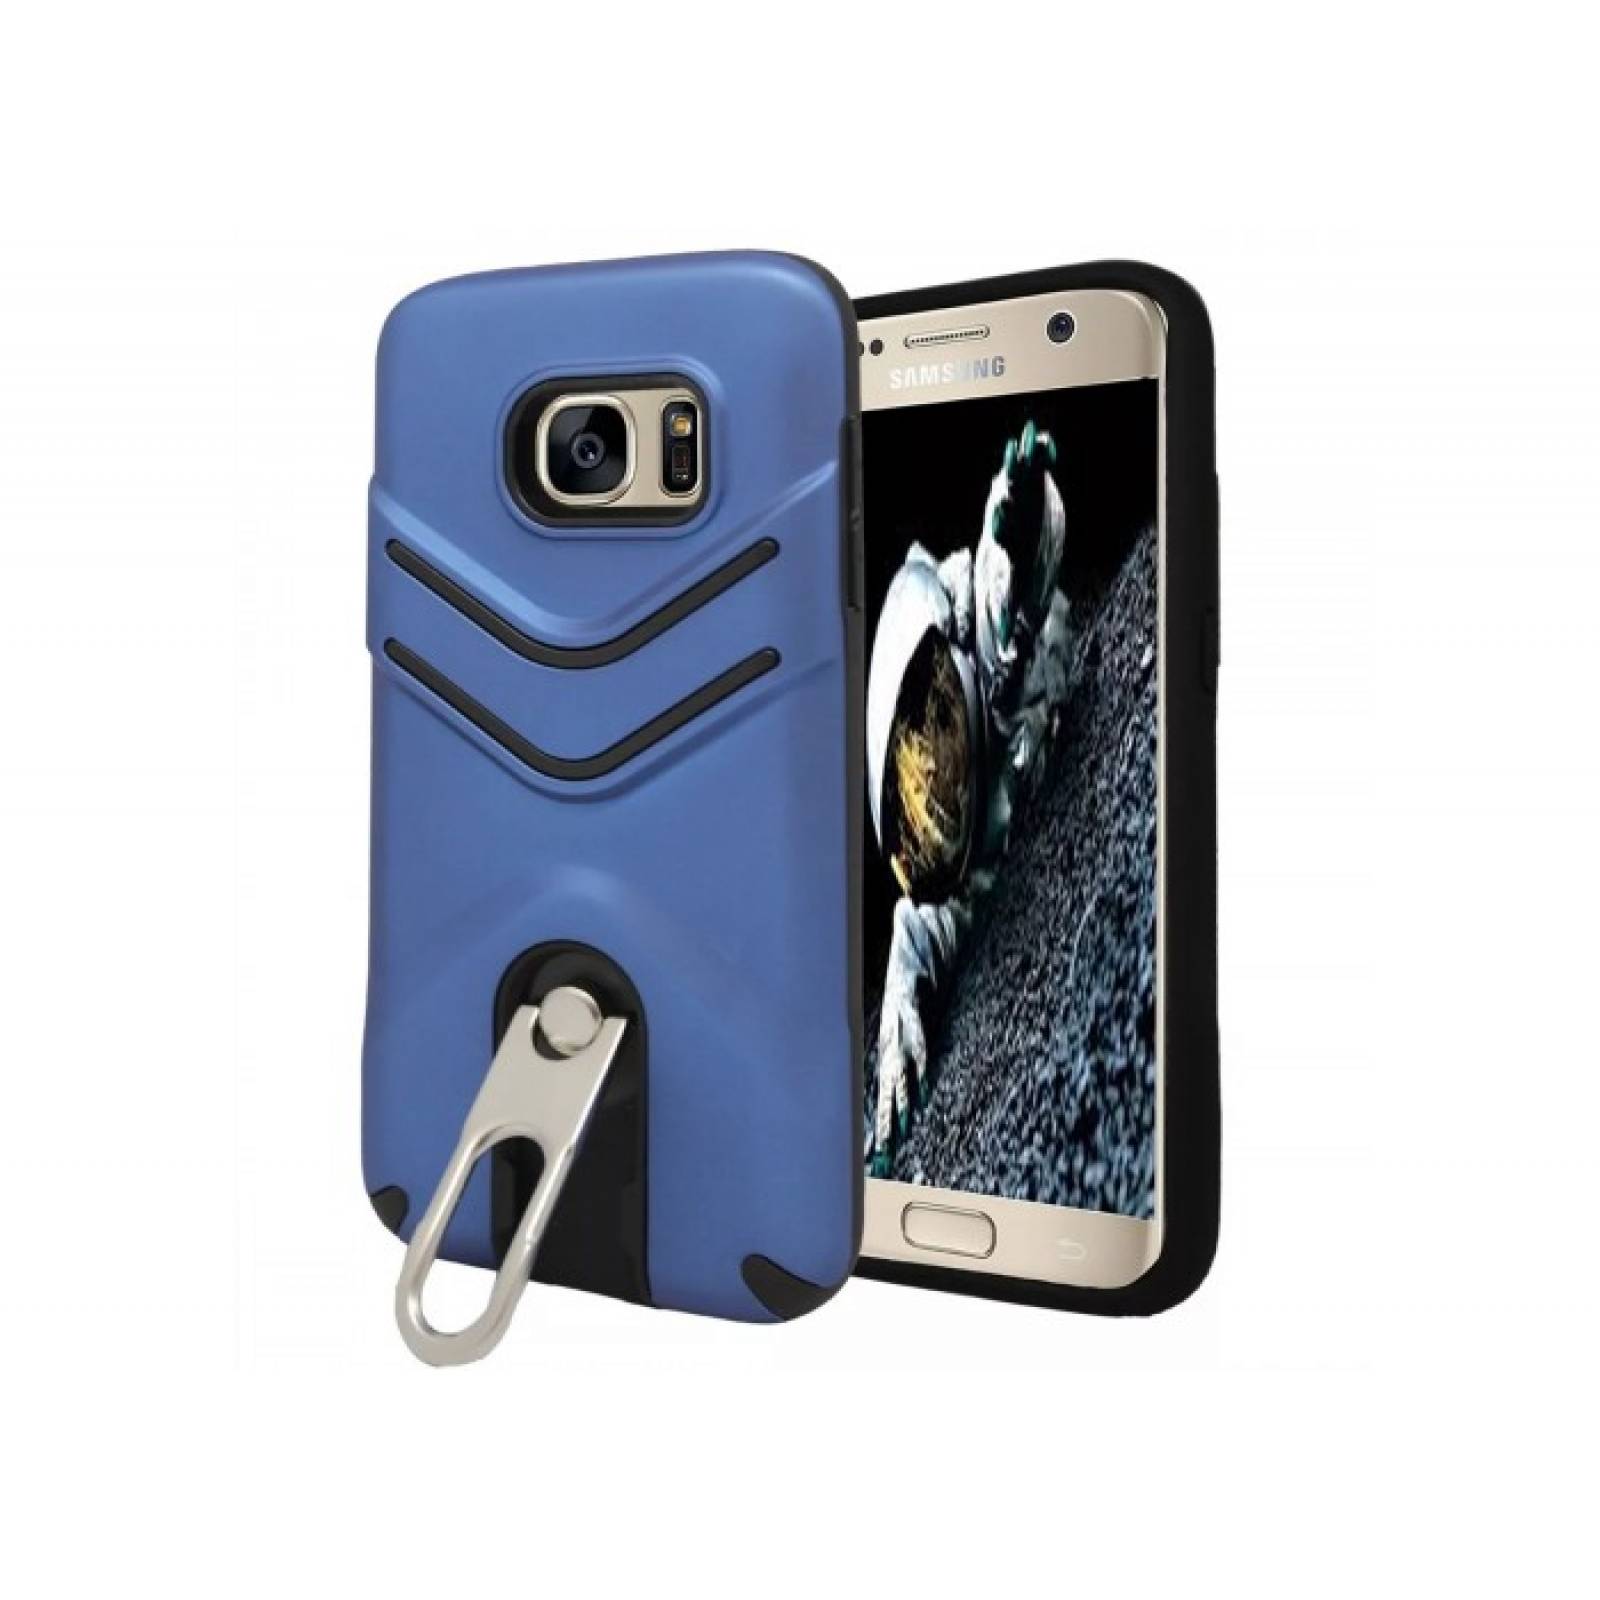 Funda Case + Cristal Galaxy S7 Flat SM-G930F Protector Uso Rudo Iron Bear